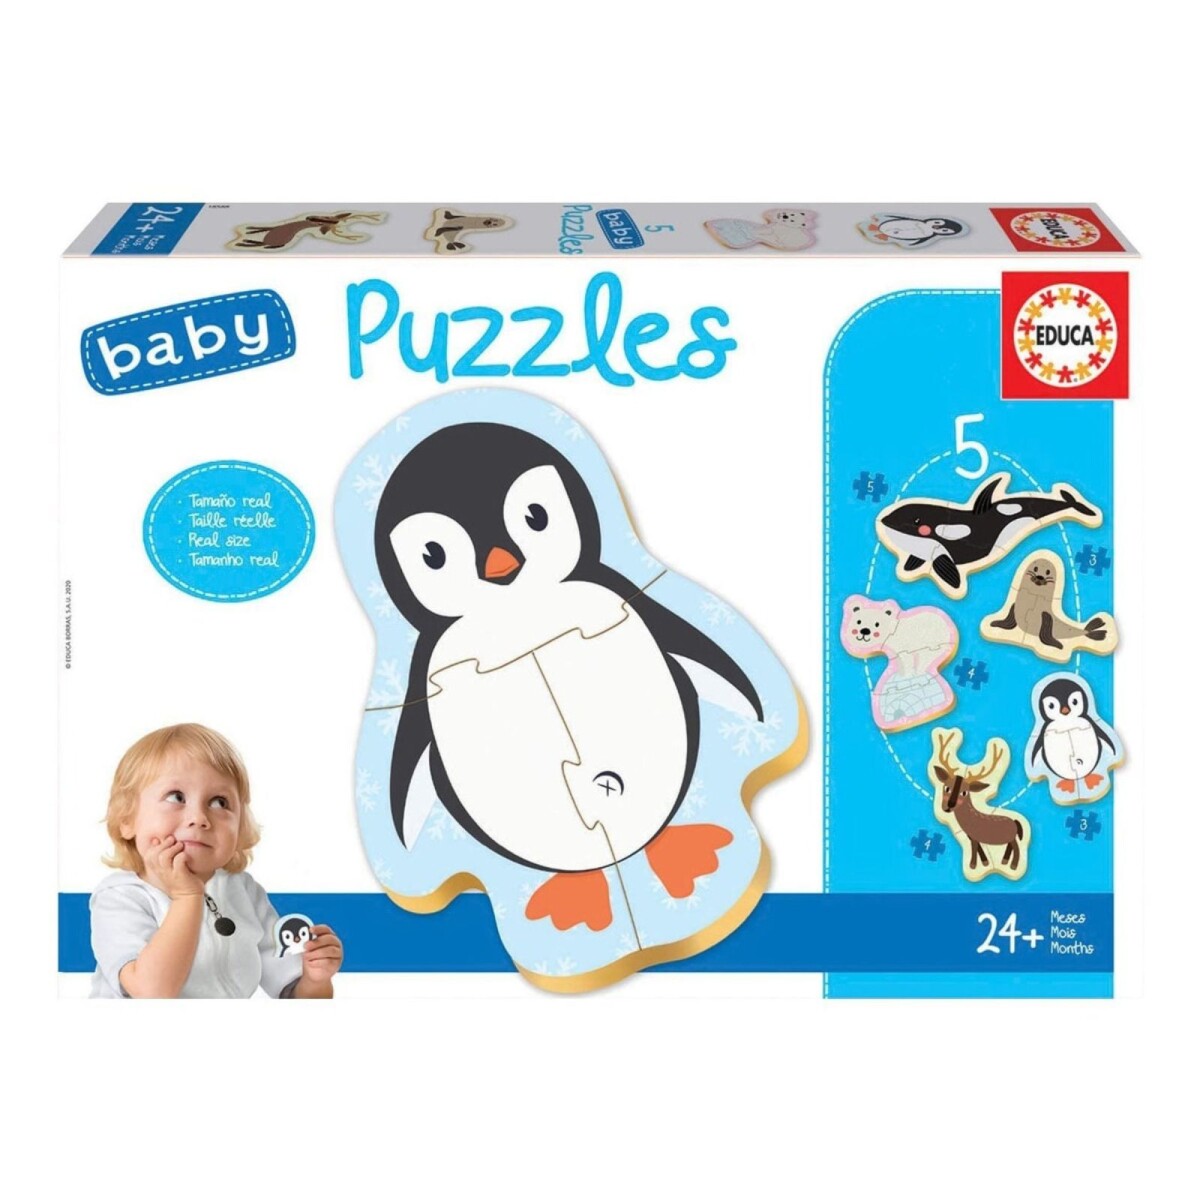 Set Puzzle Pinguino Oso Ciervo Bebes Educa Rompecabezas 